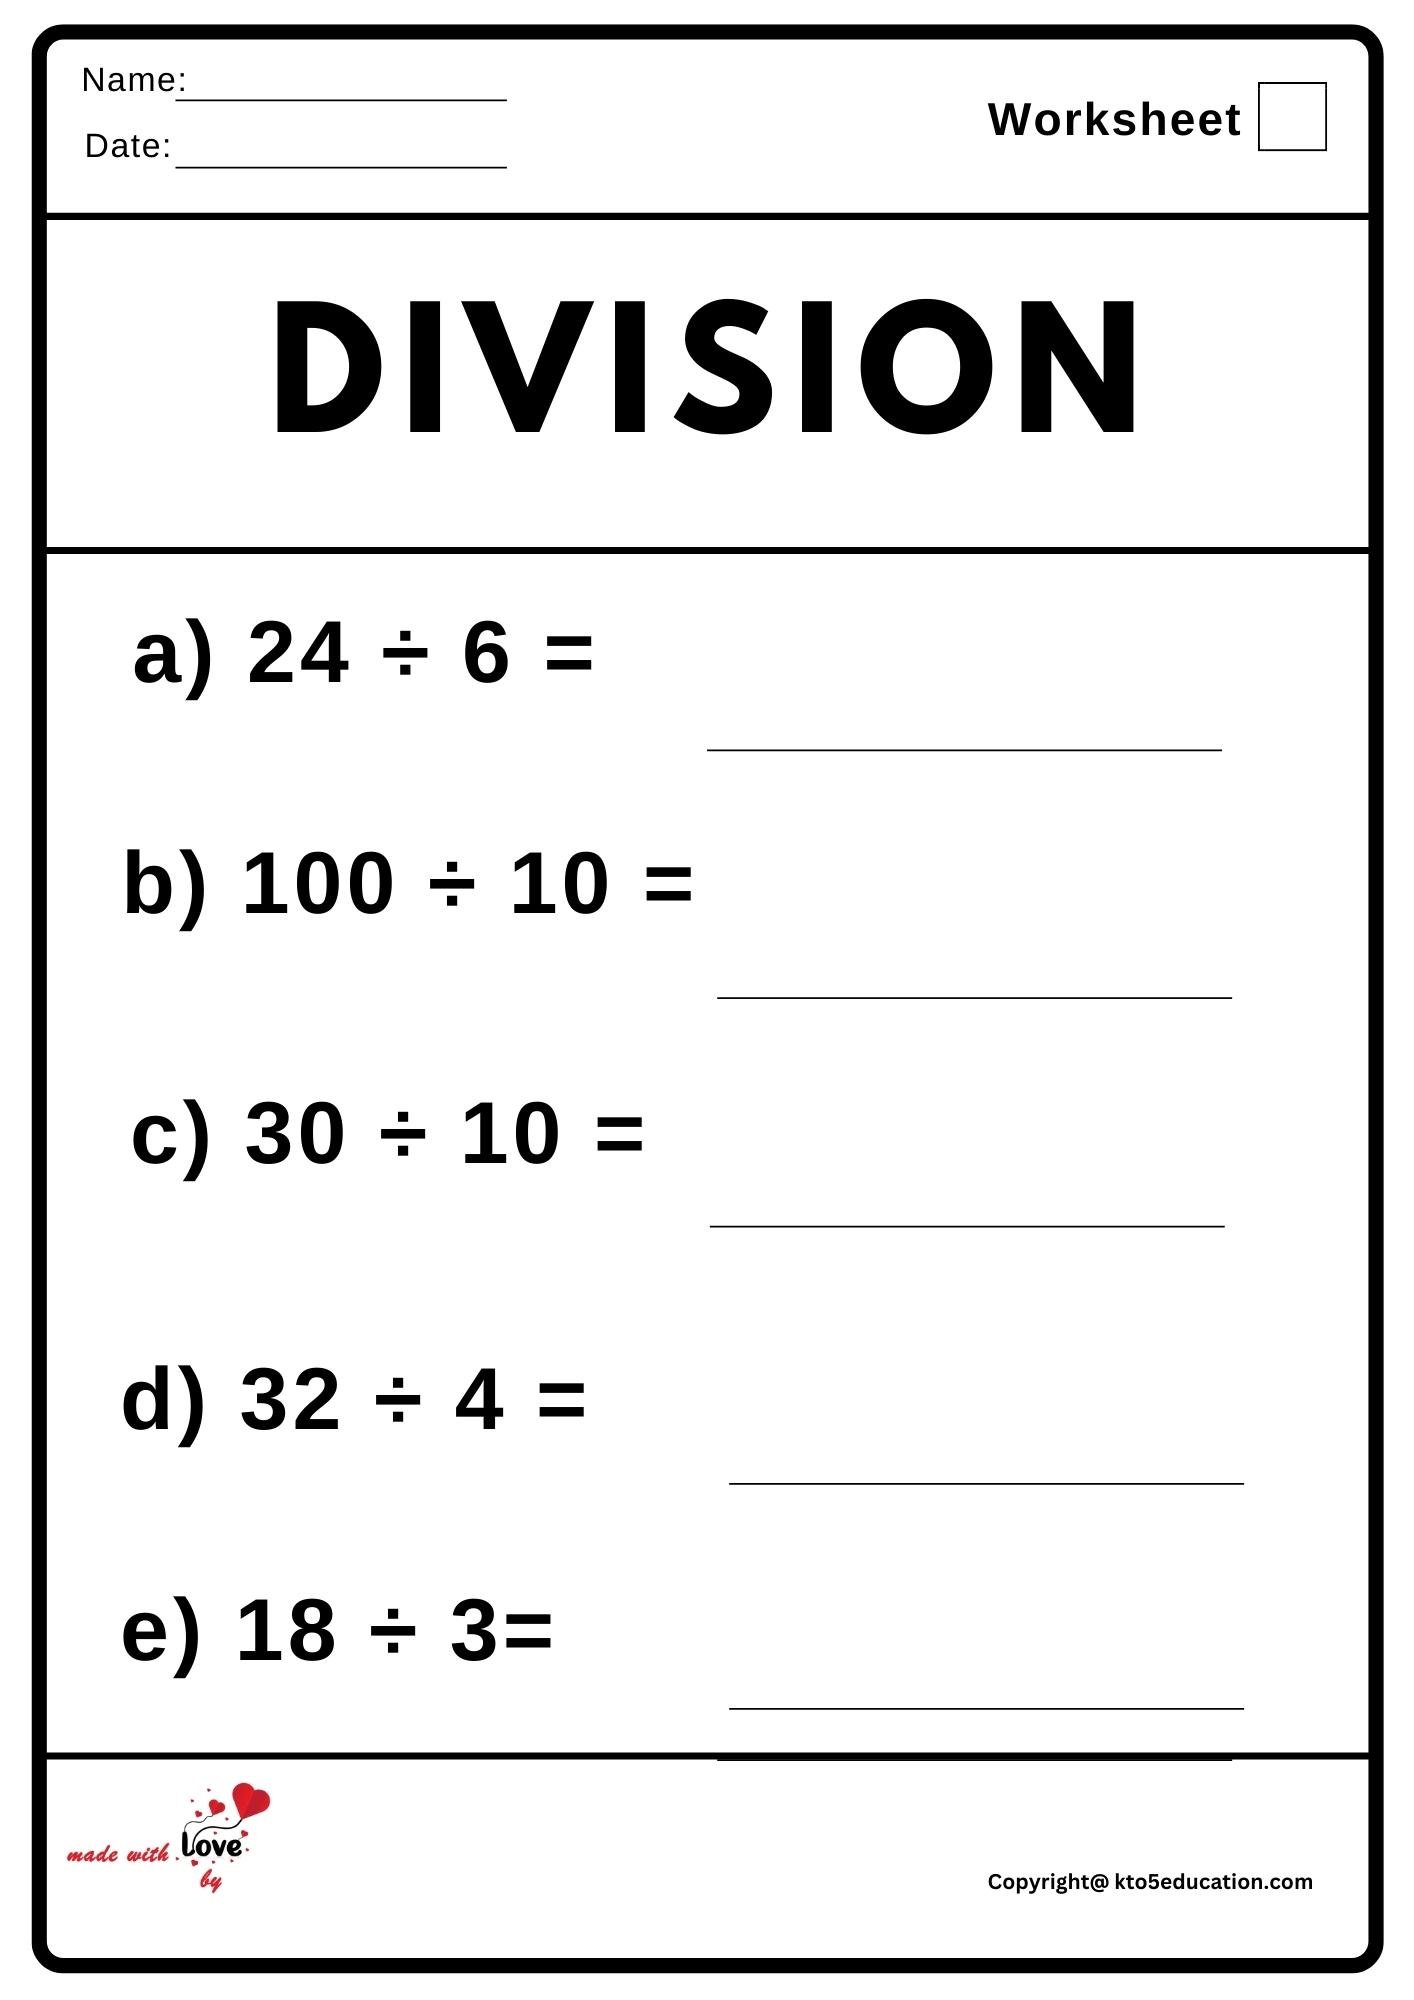 Division Worksheet 2